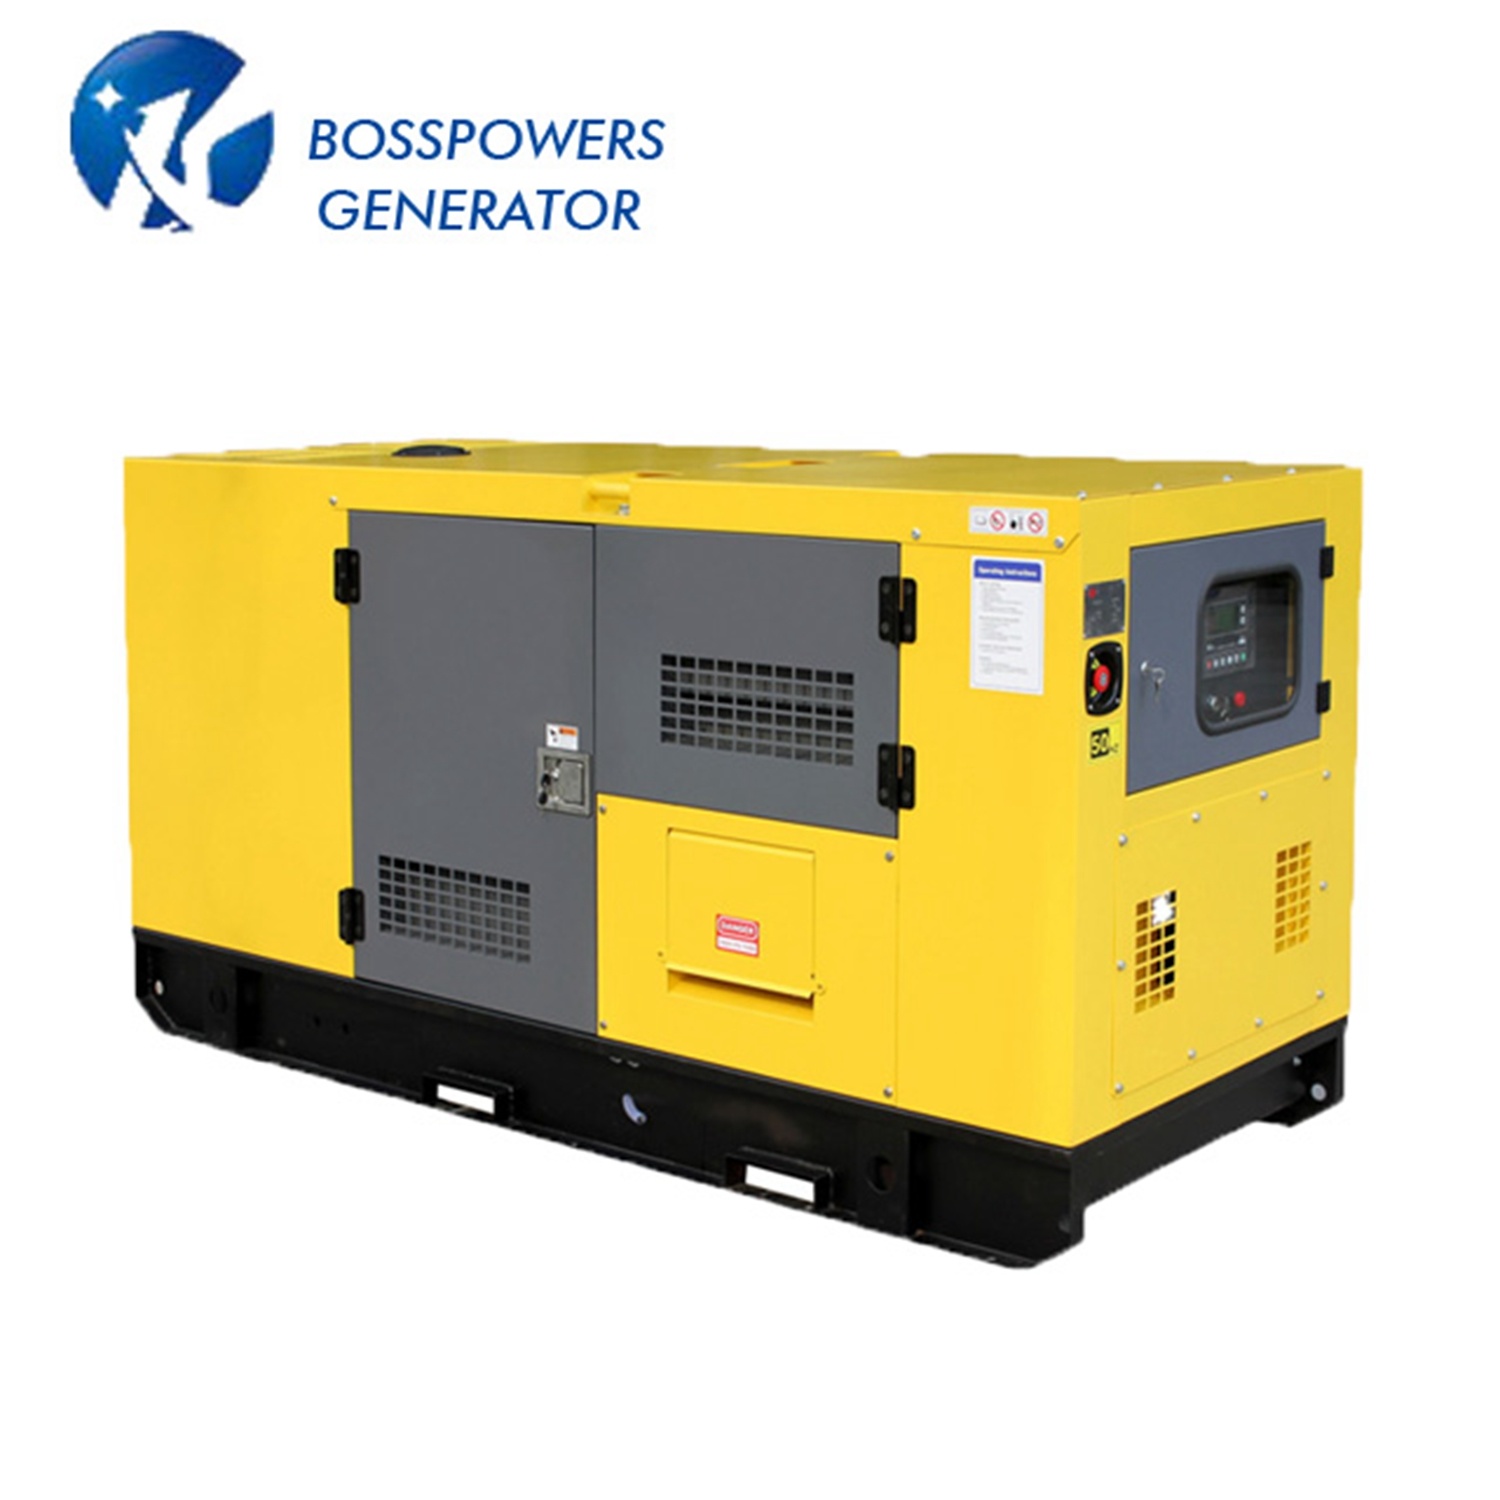 1000kVA Prime Power Electric Generator Power Plant Powered by Kta38-G5